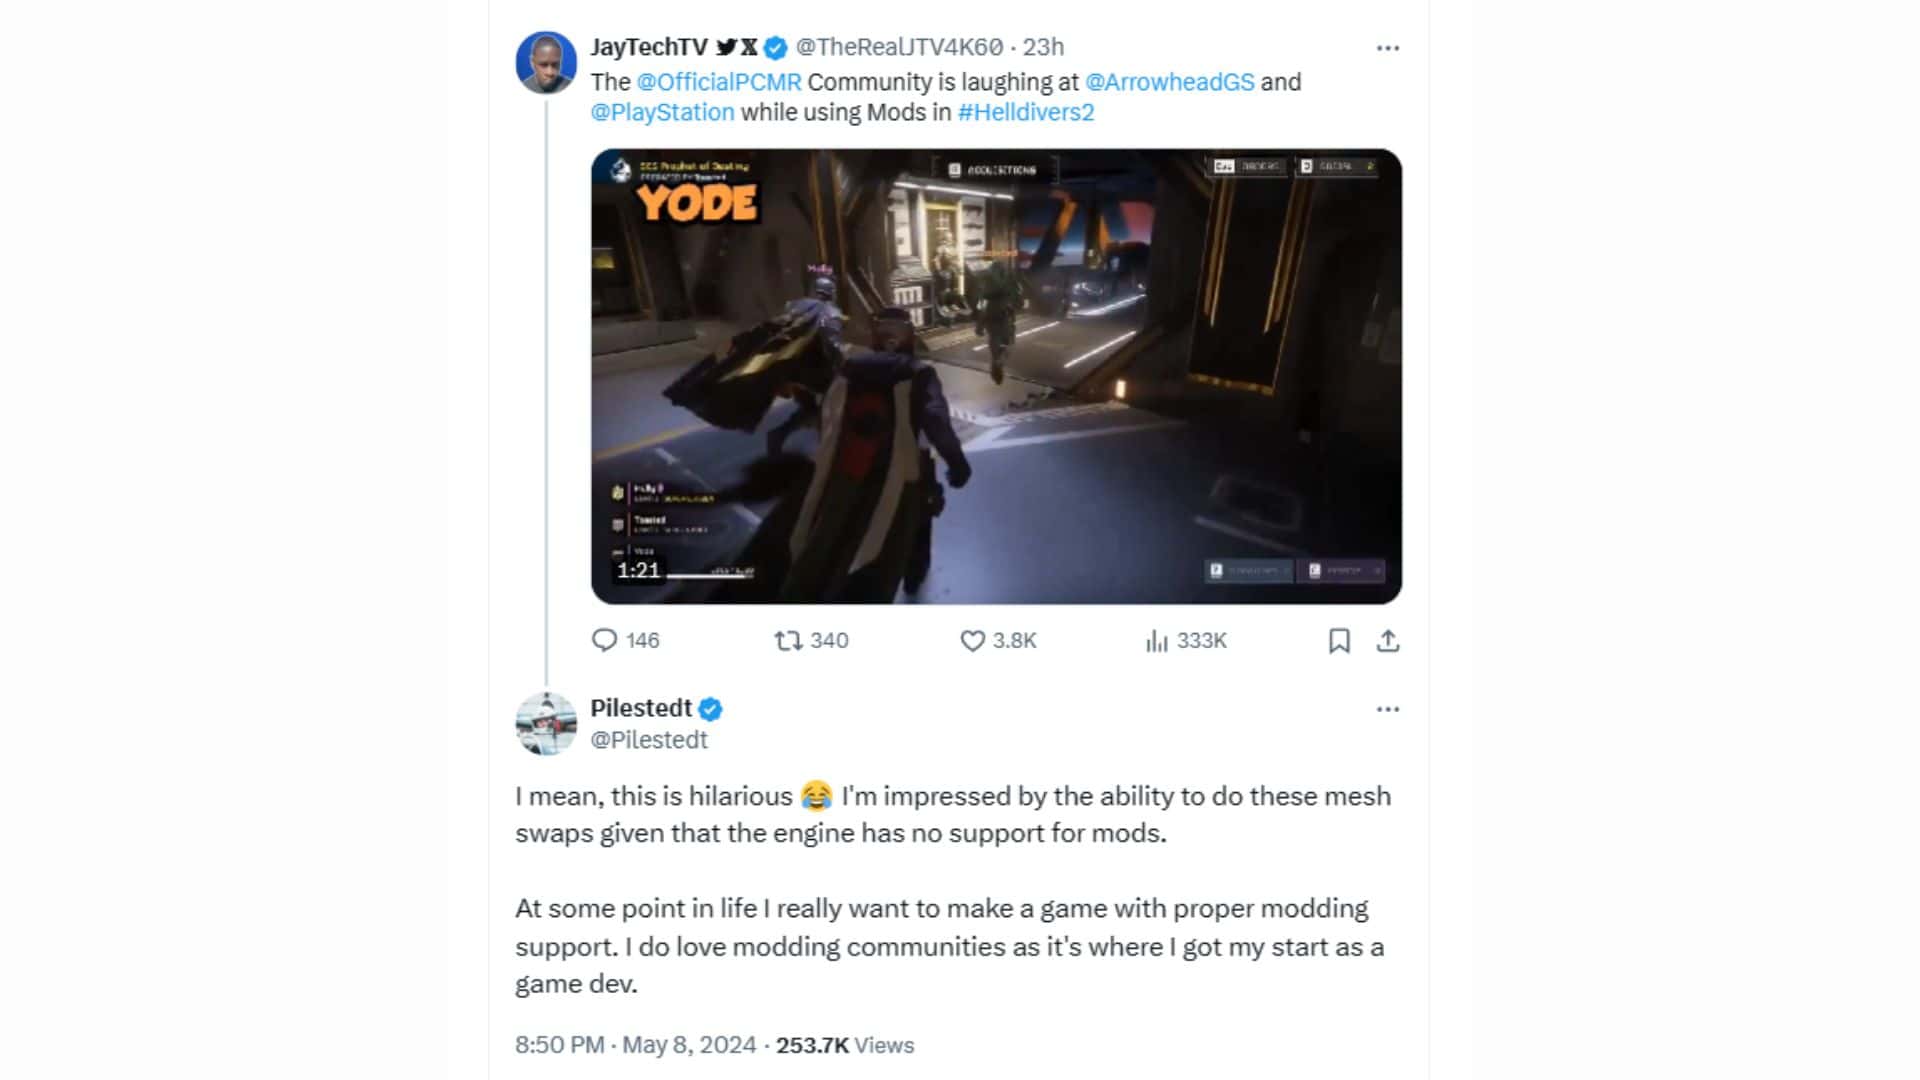 Helldivers 2 CEO mods tweet